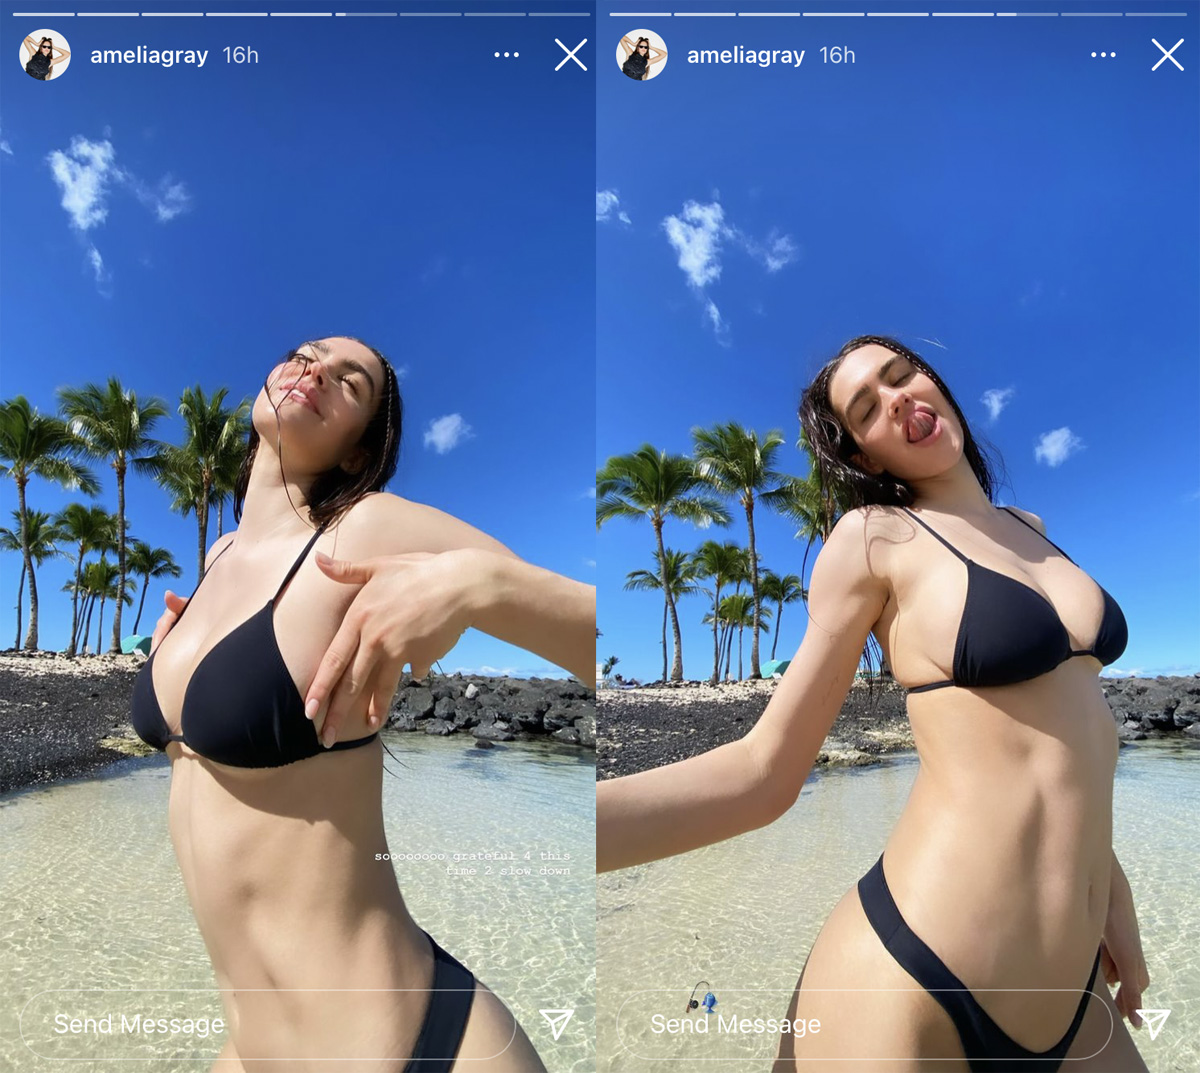 Amelia Hamlin Posts Jaw-Dropping Bikini Photographs Taken On Hawaii Trip! micron width=